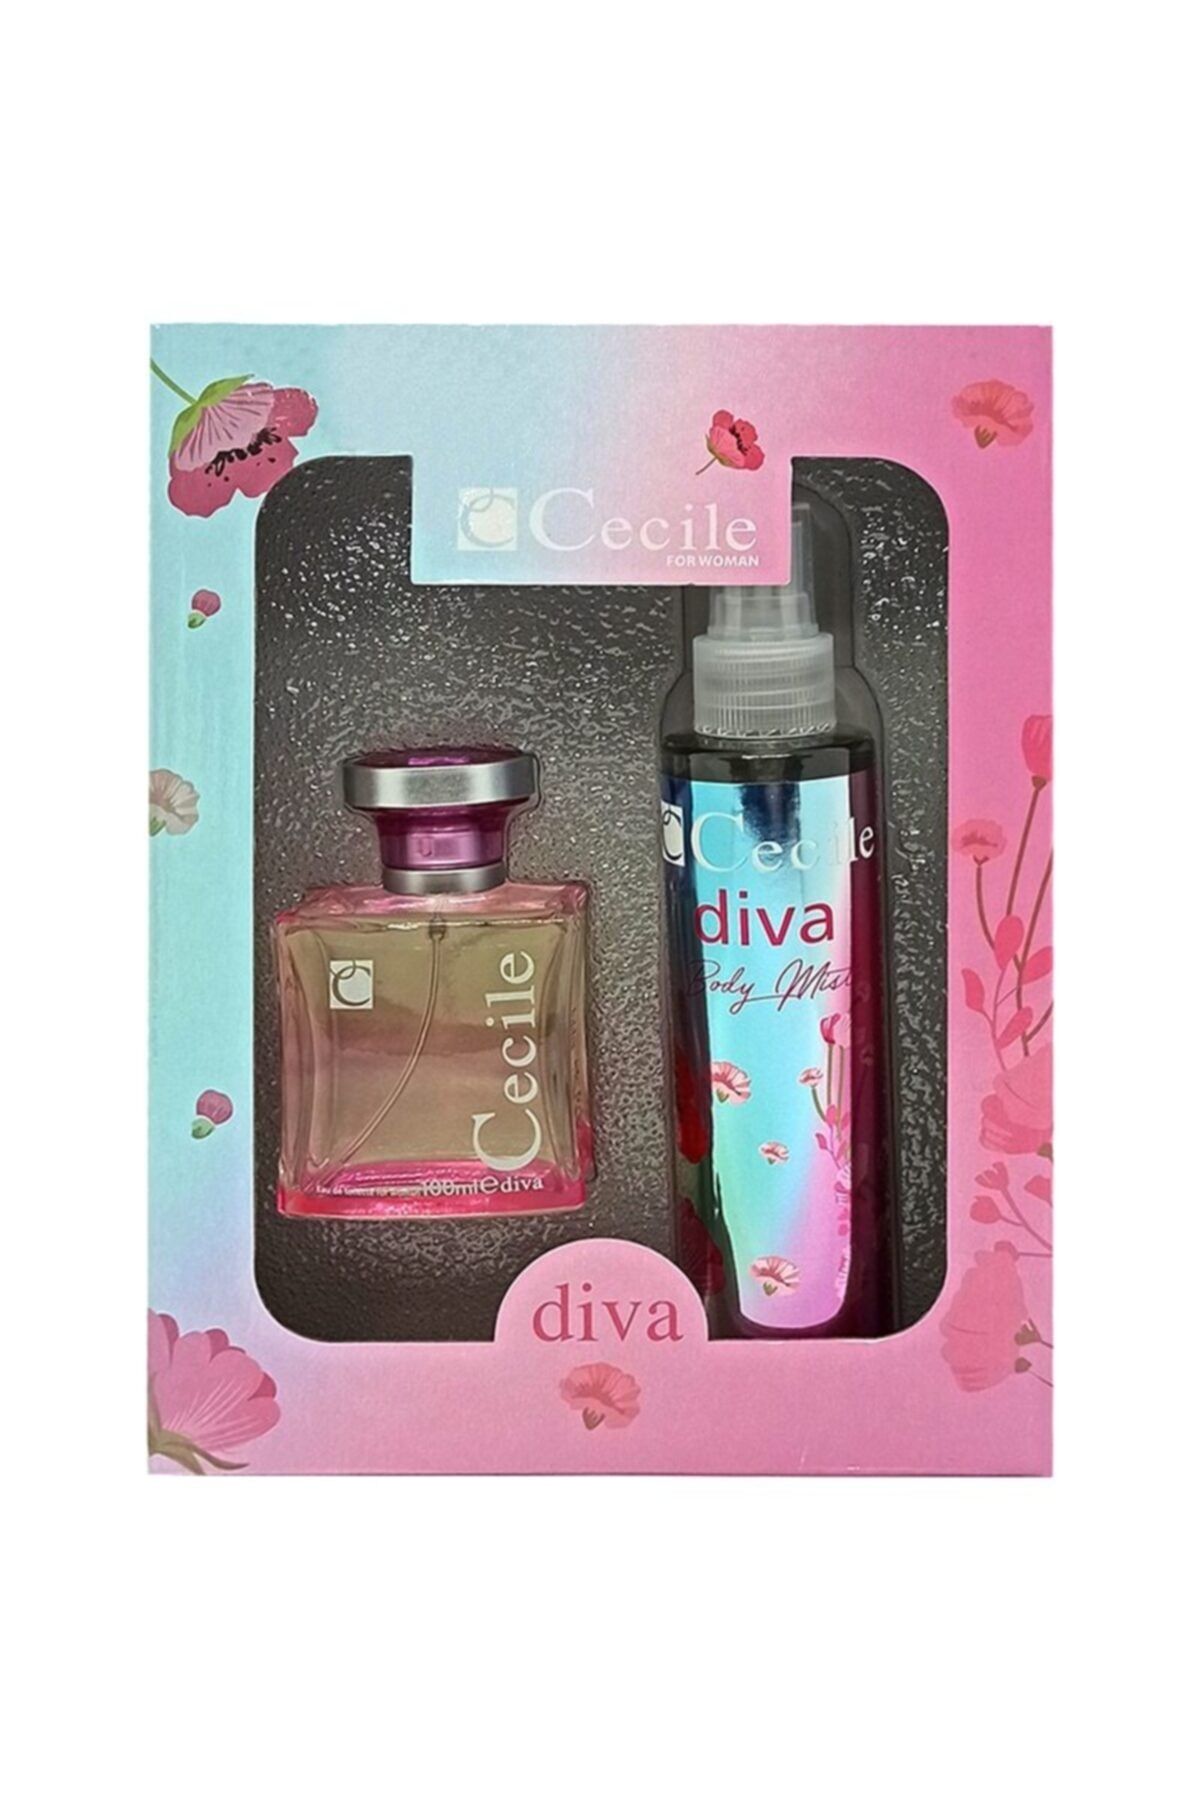 Cecile Diva Edt Kadın Parfüm 100 Ml + Body Mist Deodorant 150 Ml Set